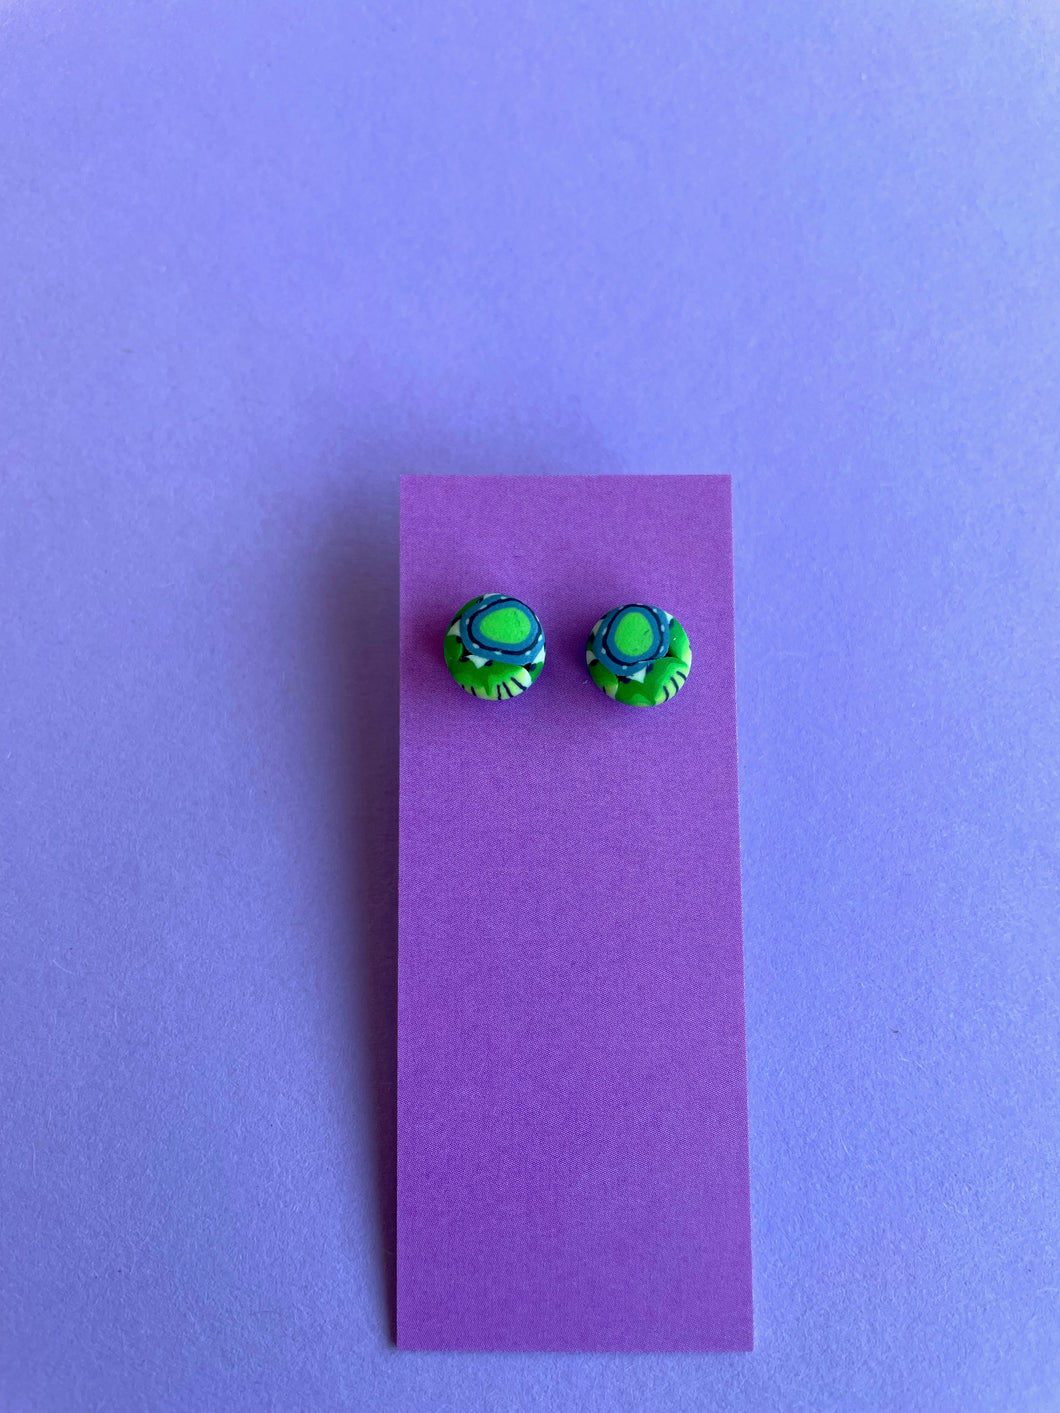 Stud earrings in bright green circle design